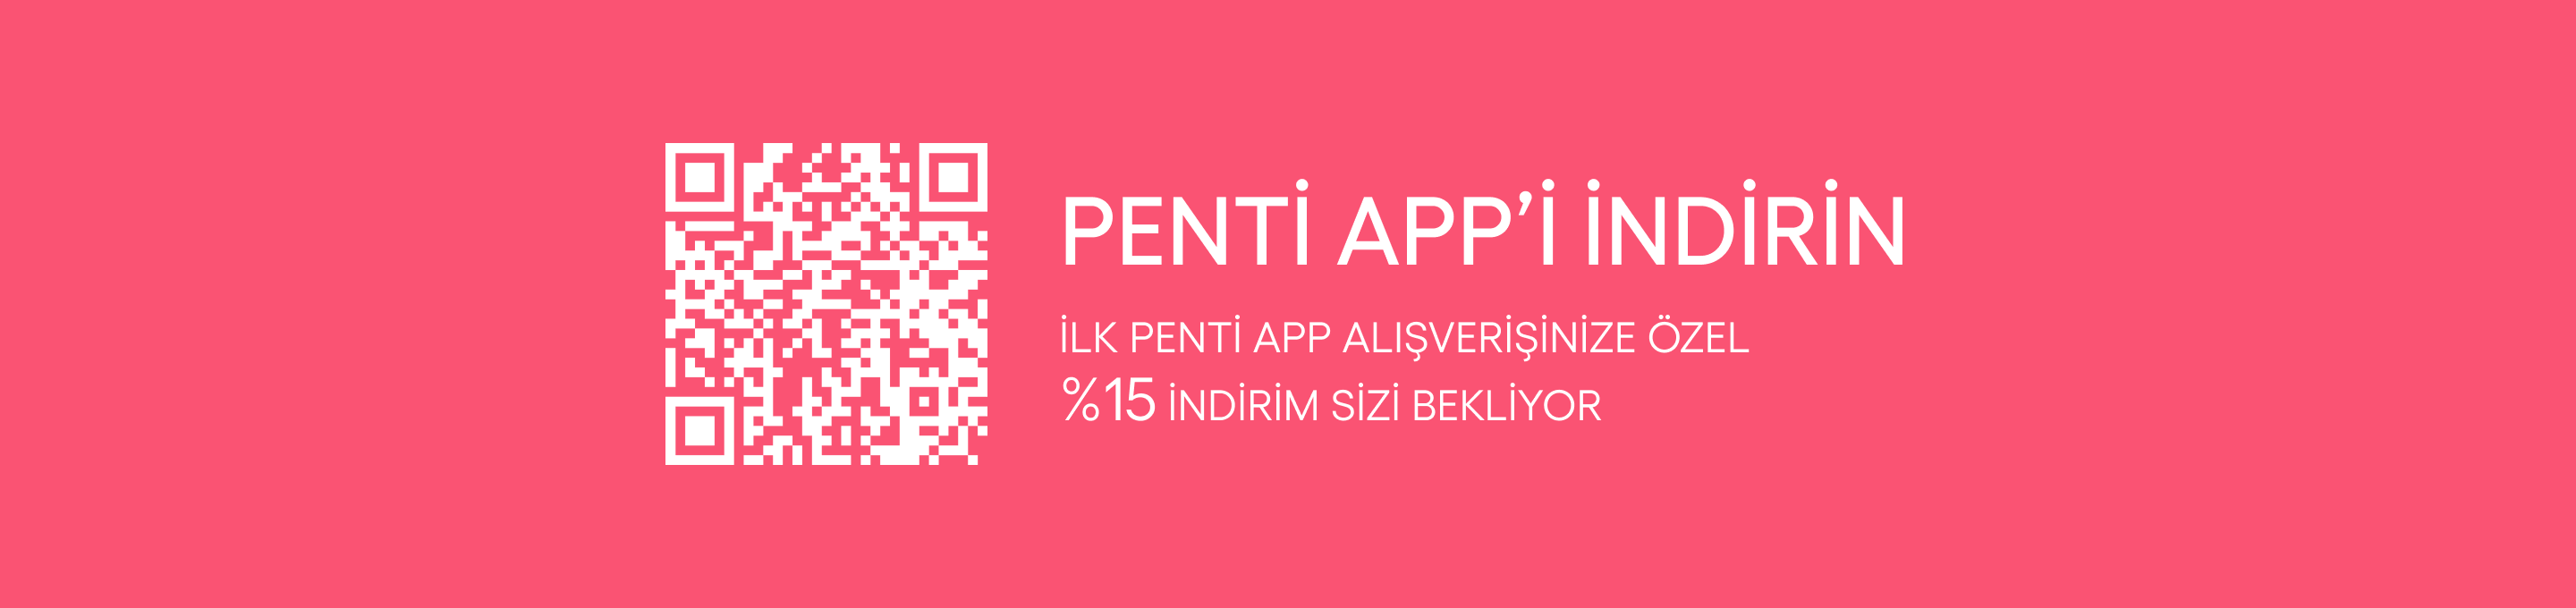 Penti App